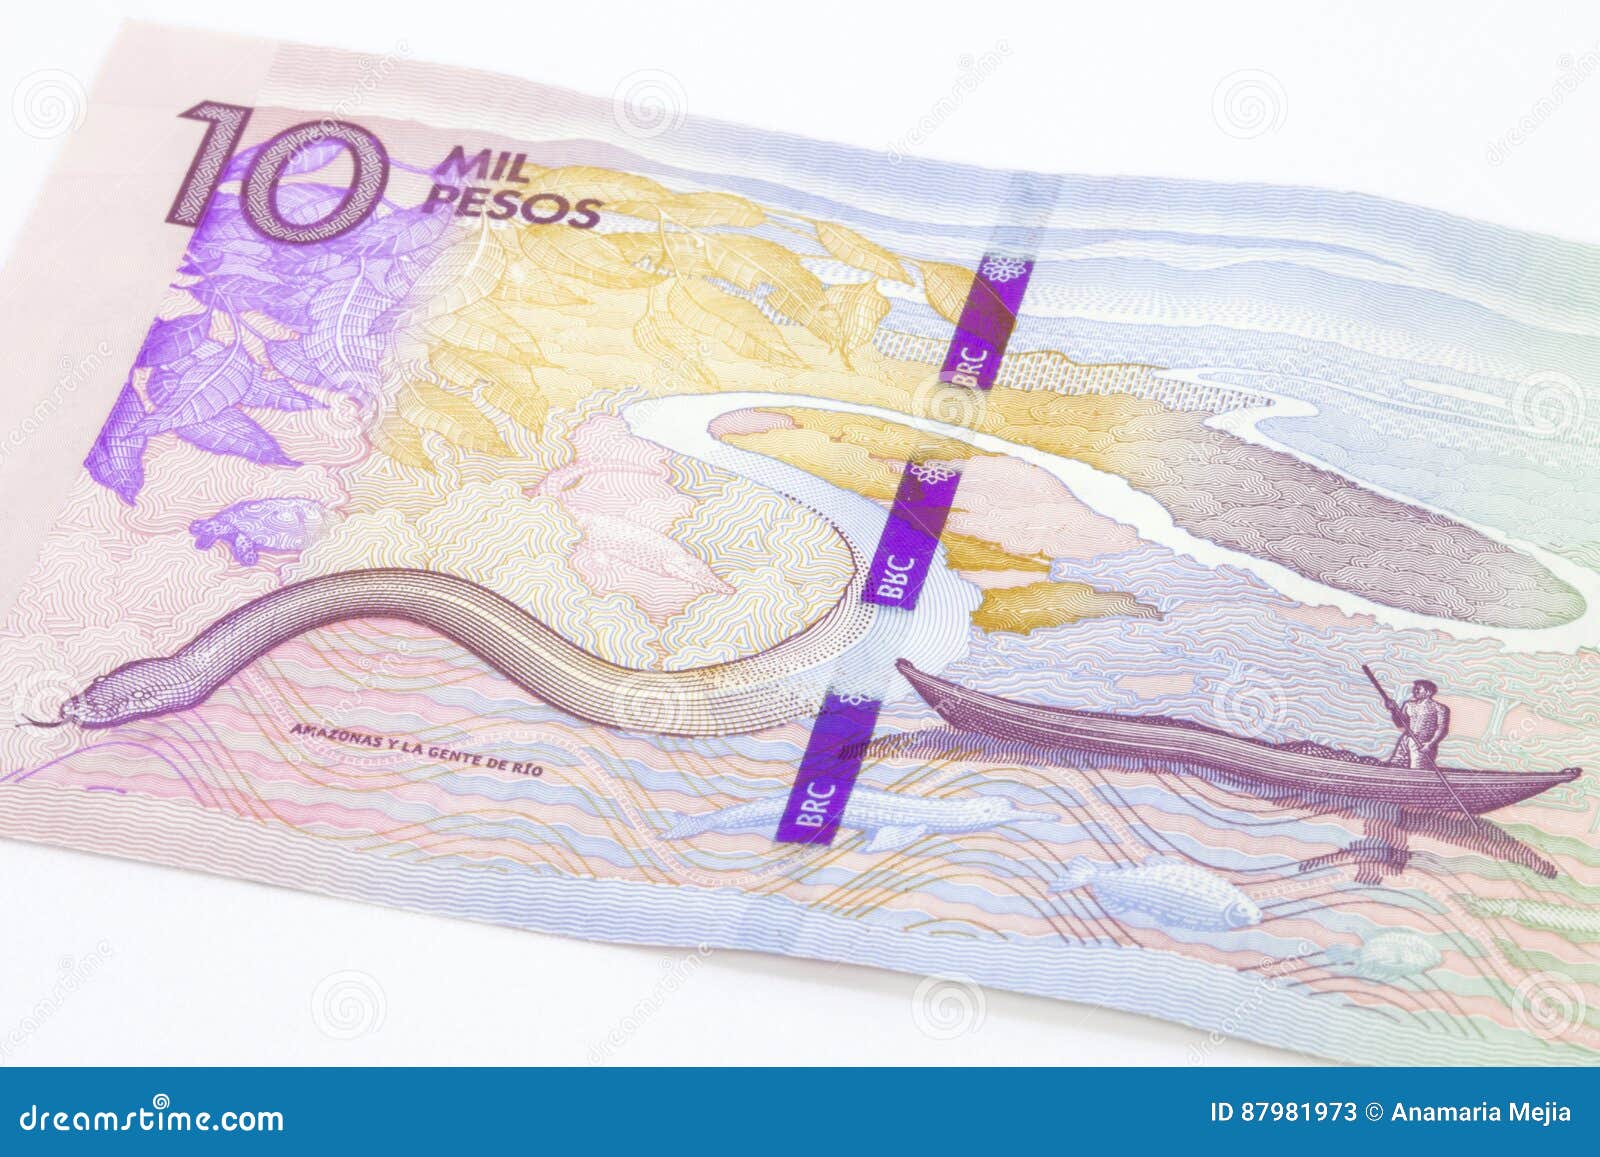 ten thousand colombian pesos bill